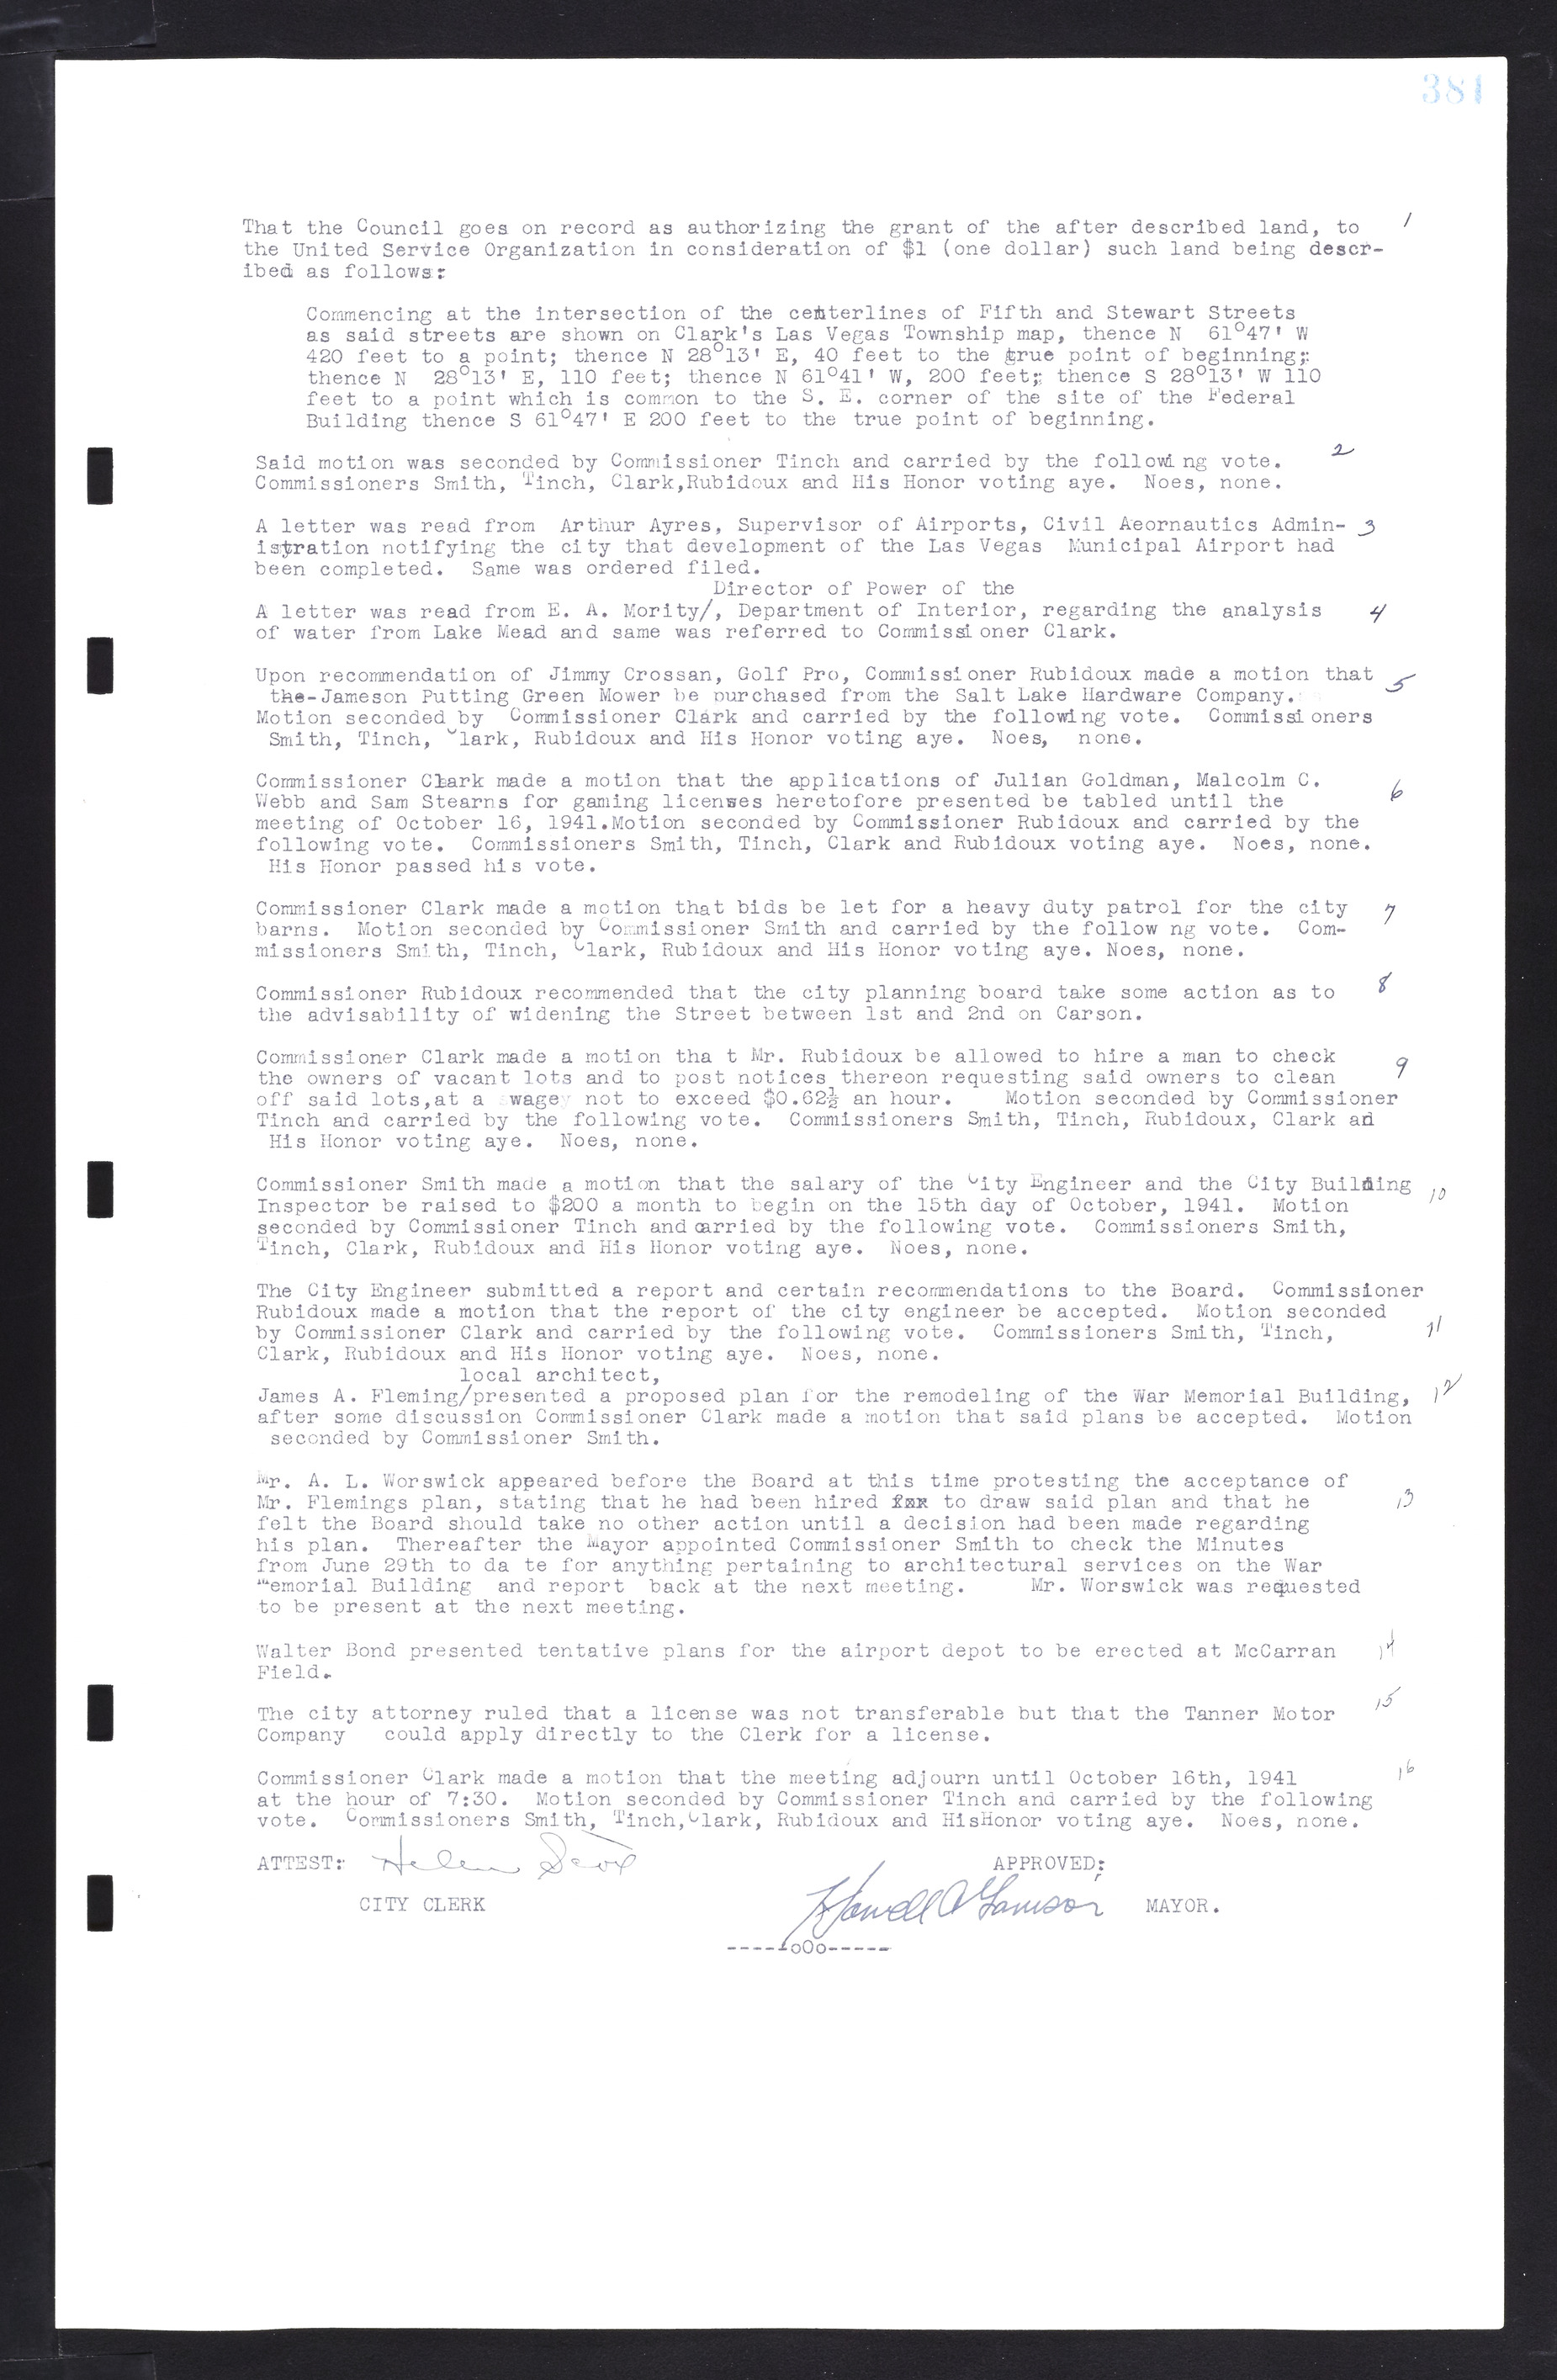 Las Vegas City Commission Minutes, February 17, 1937 to August 4, 1942, lvc000004-407